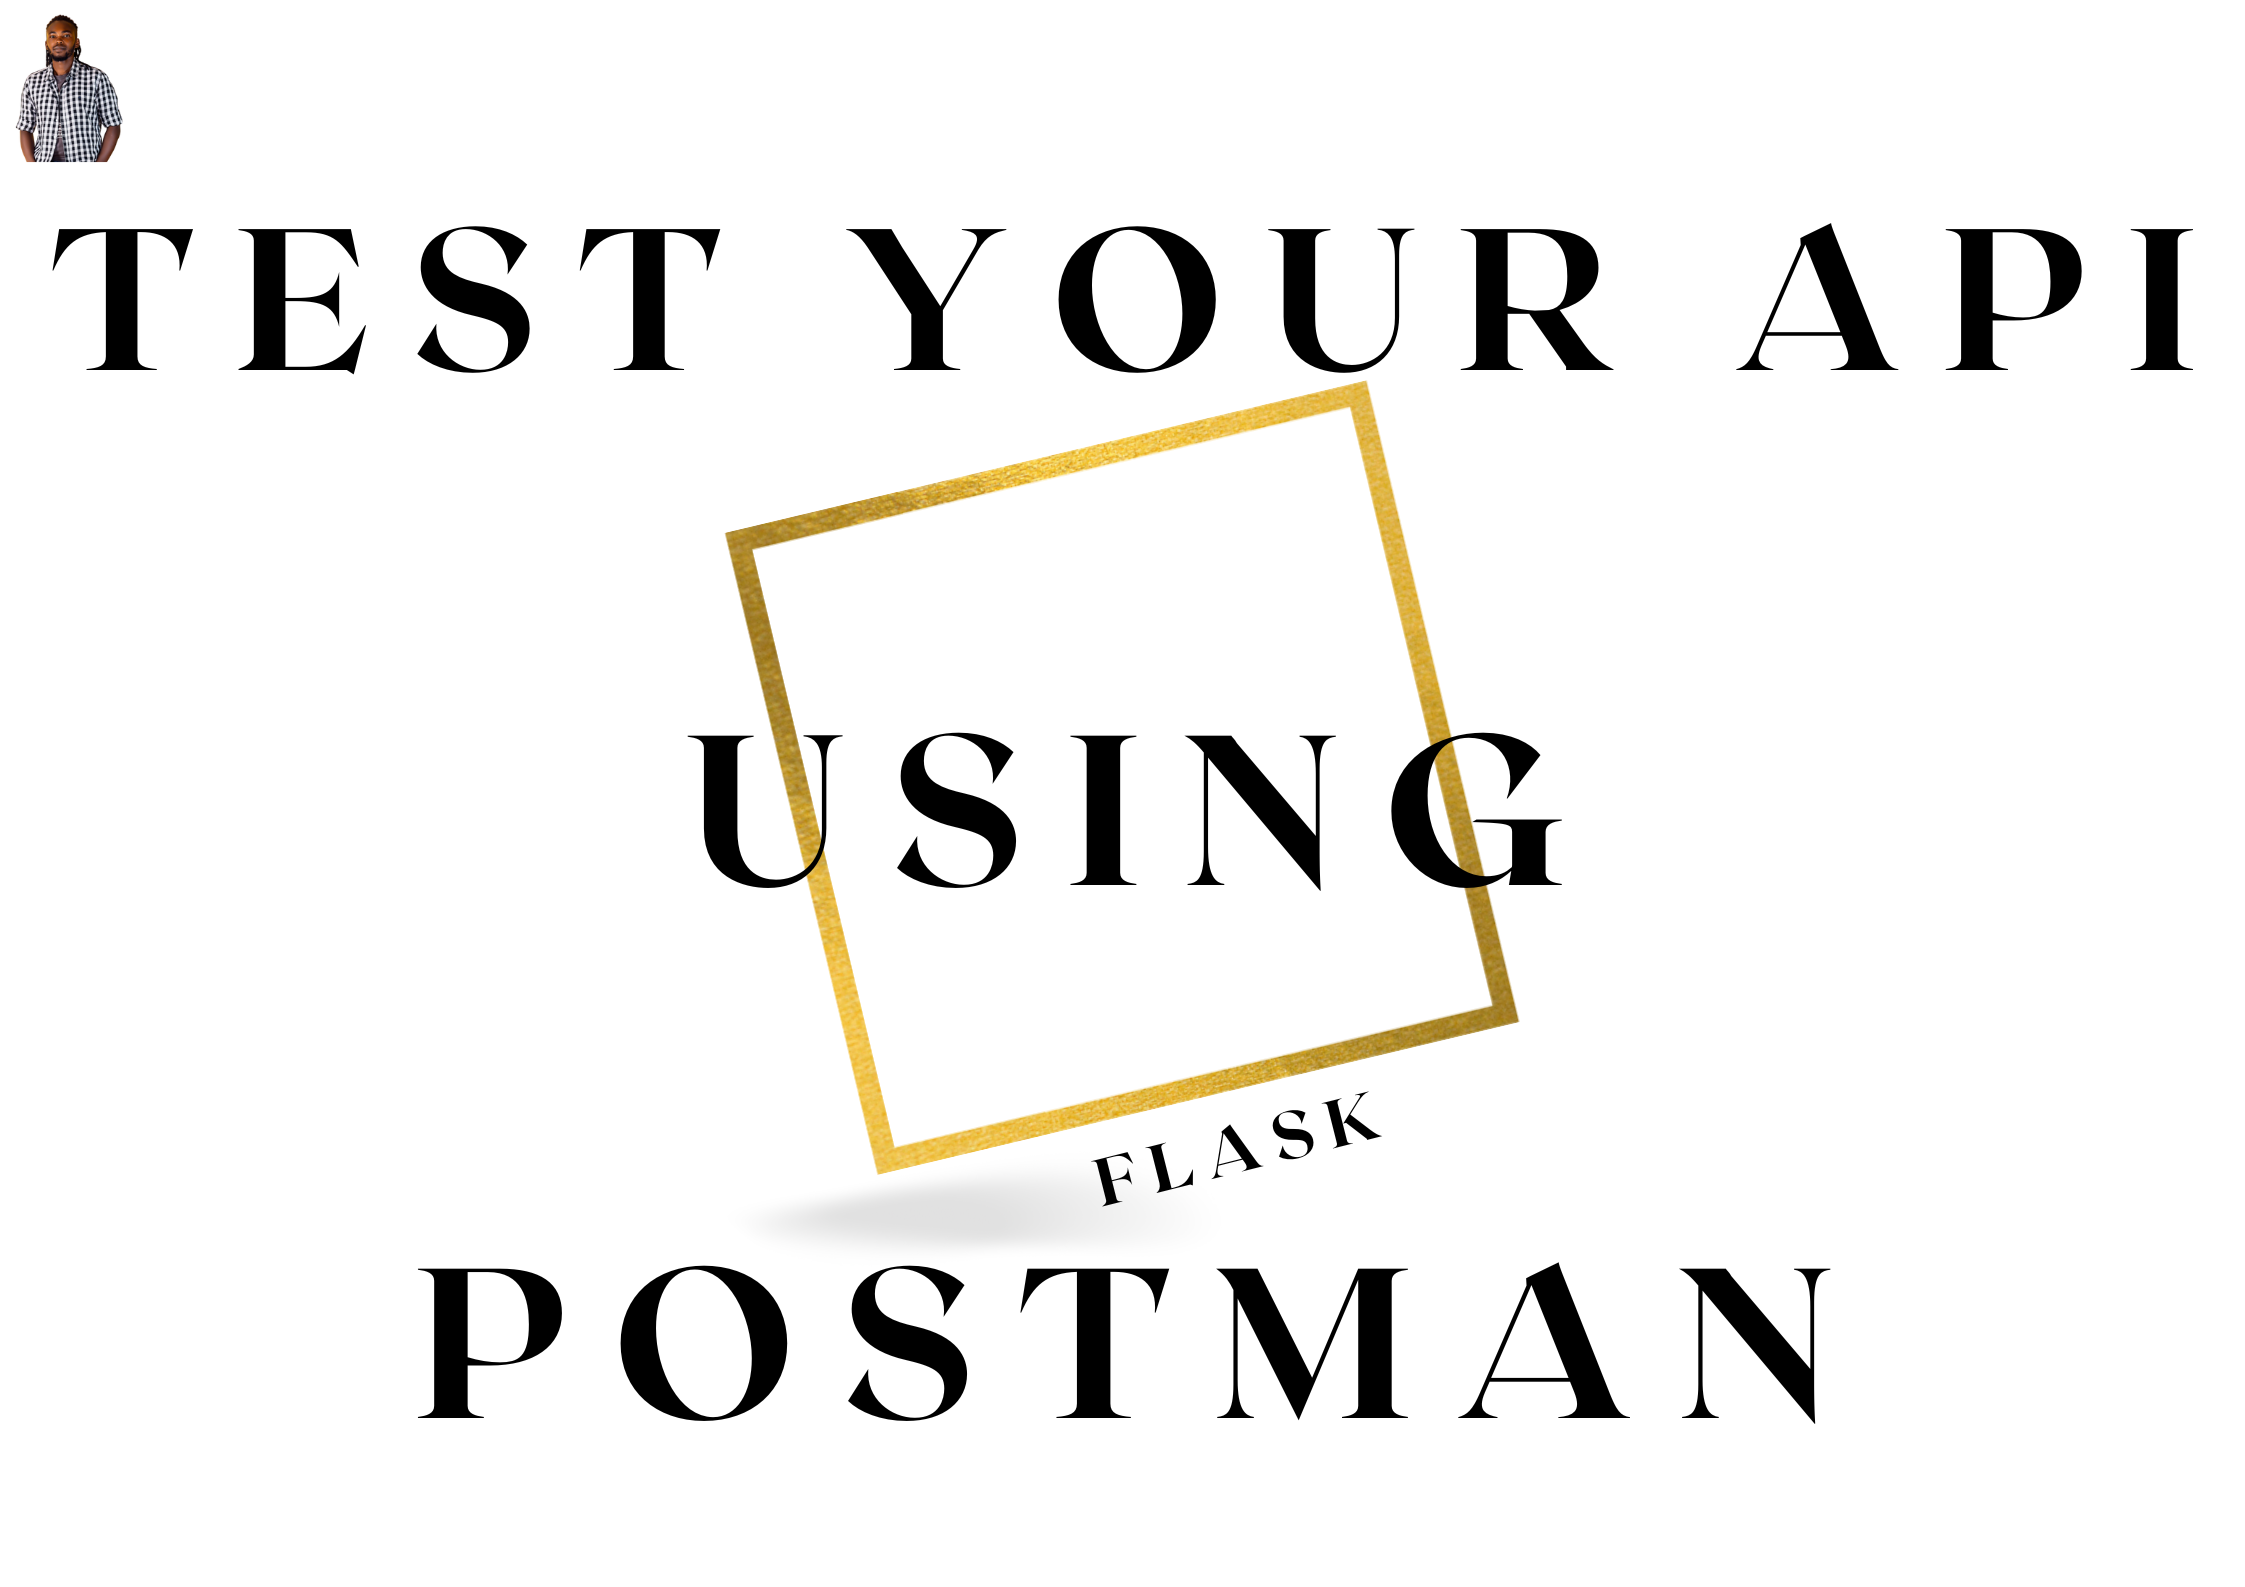 API Testing Using Postman